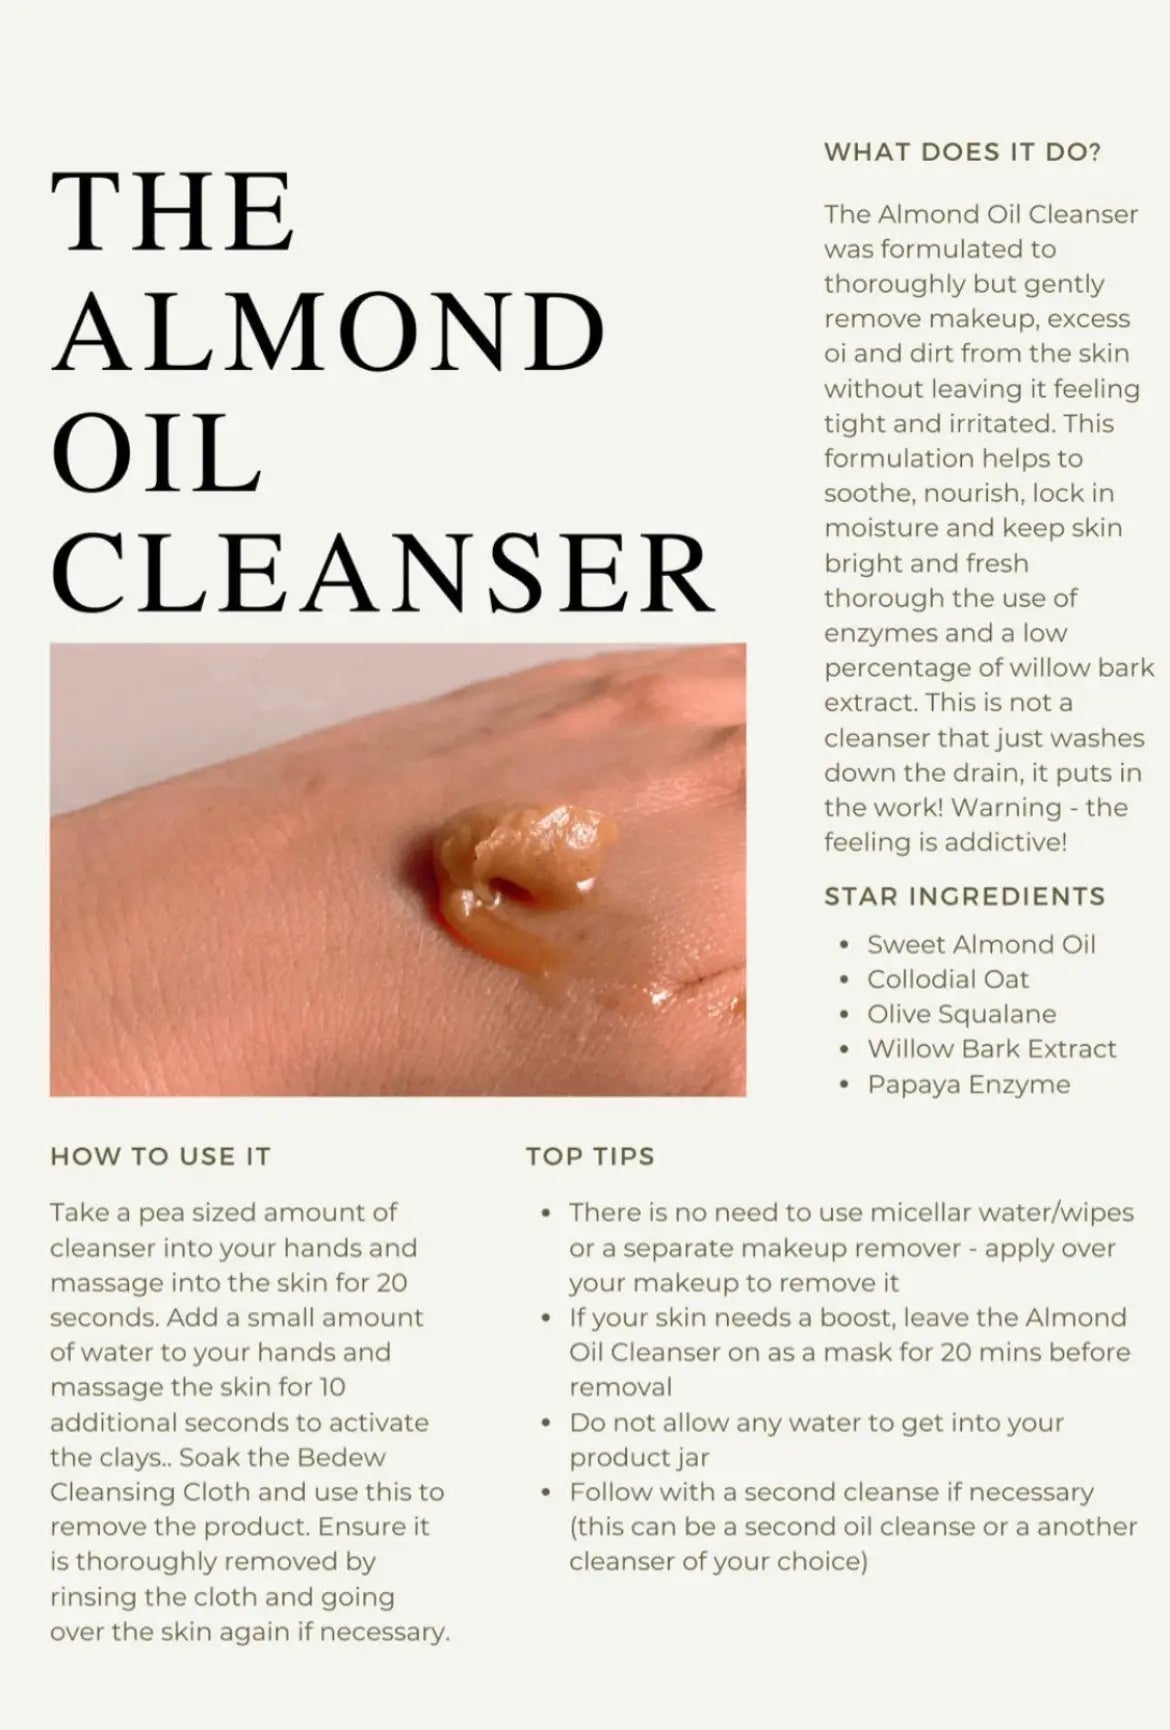 The Almond Oil Cleanser 100ml - Bedew Skin Bedew Skin